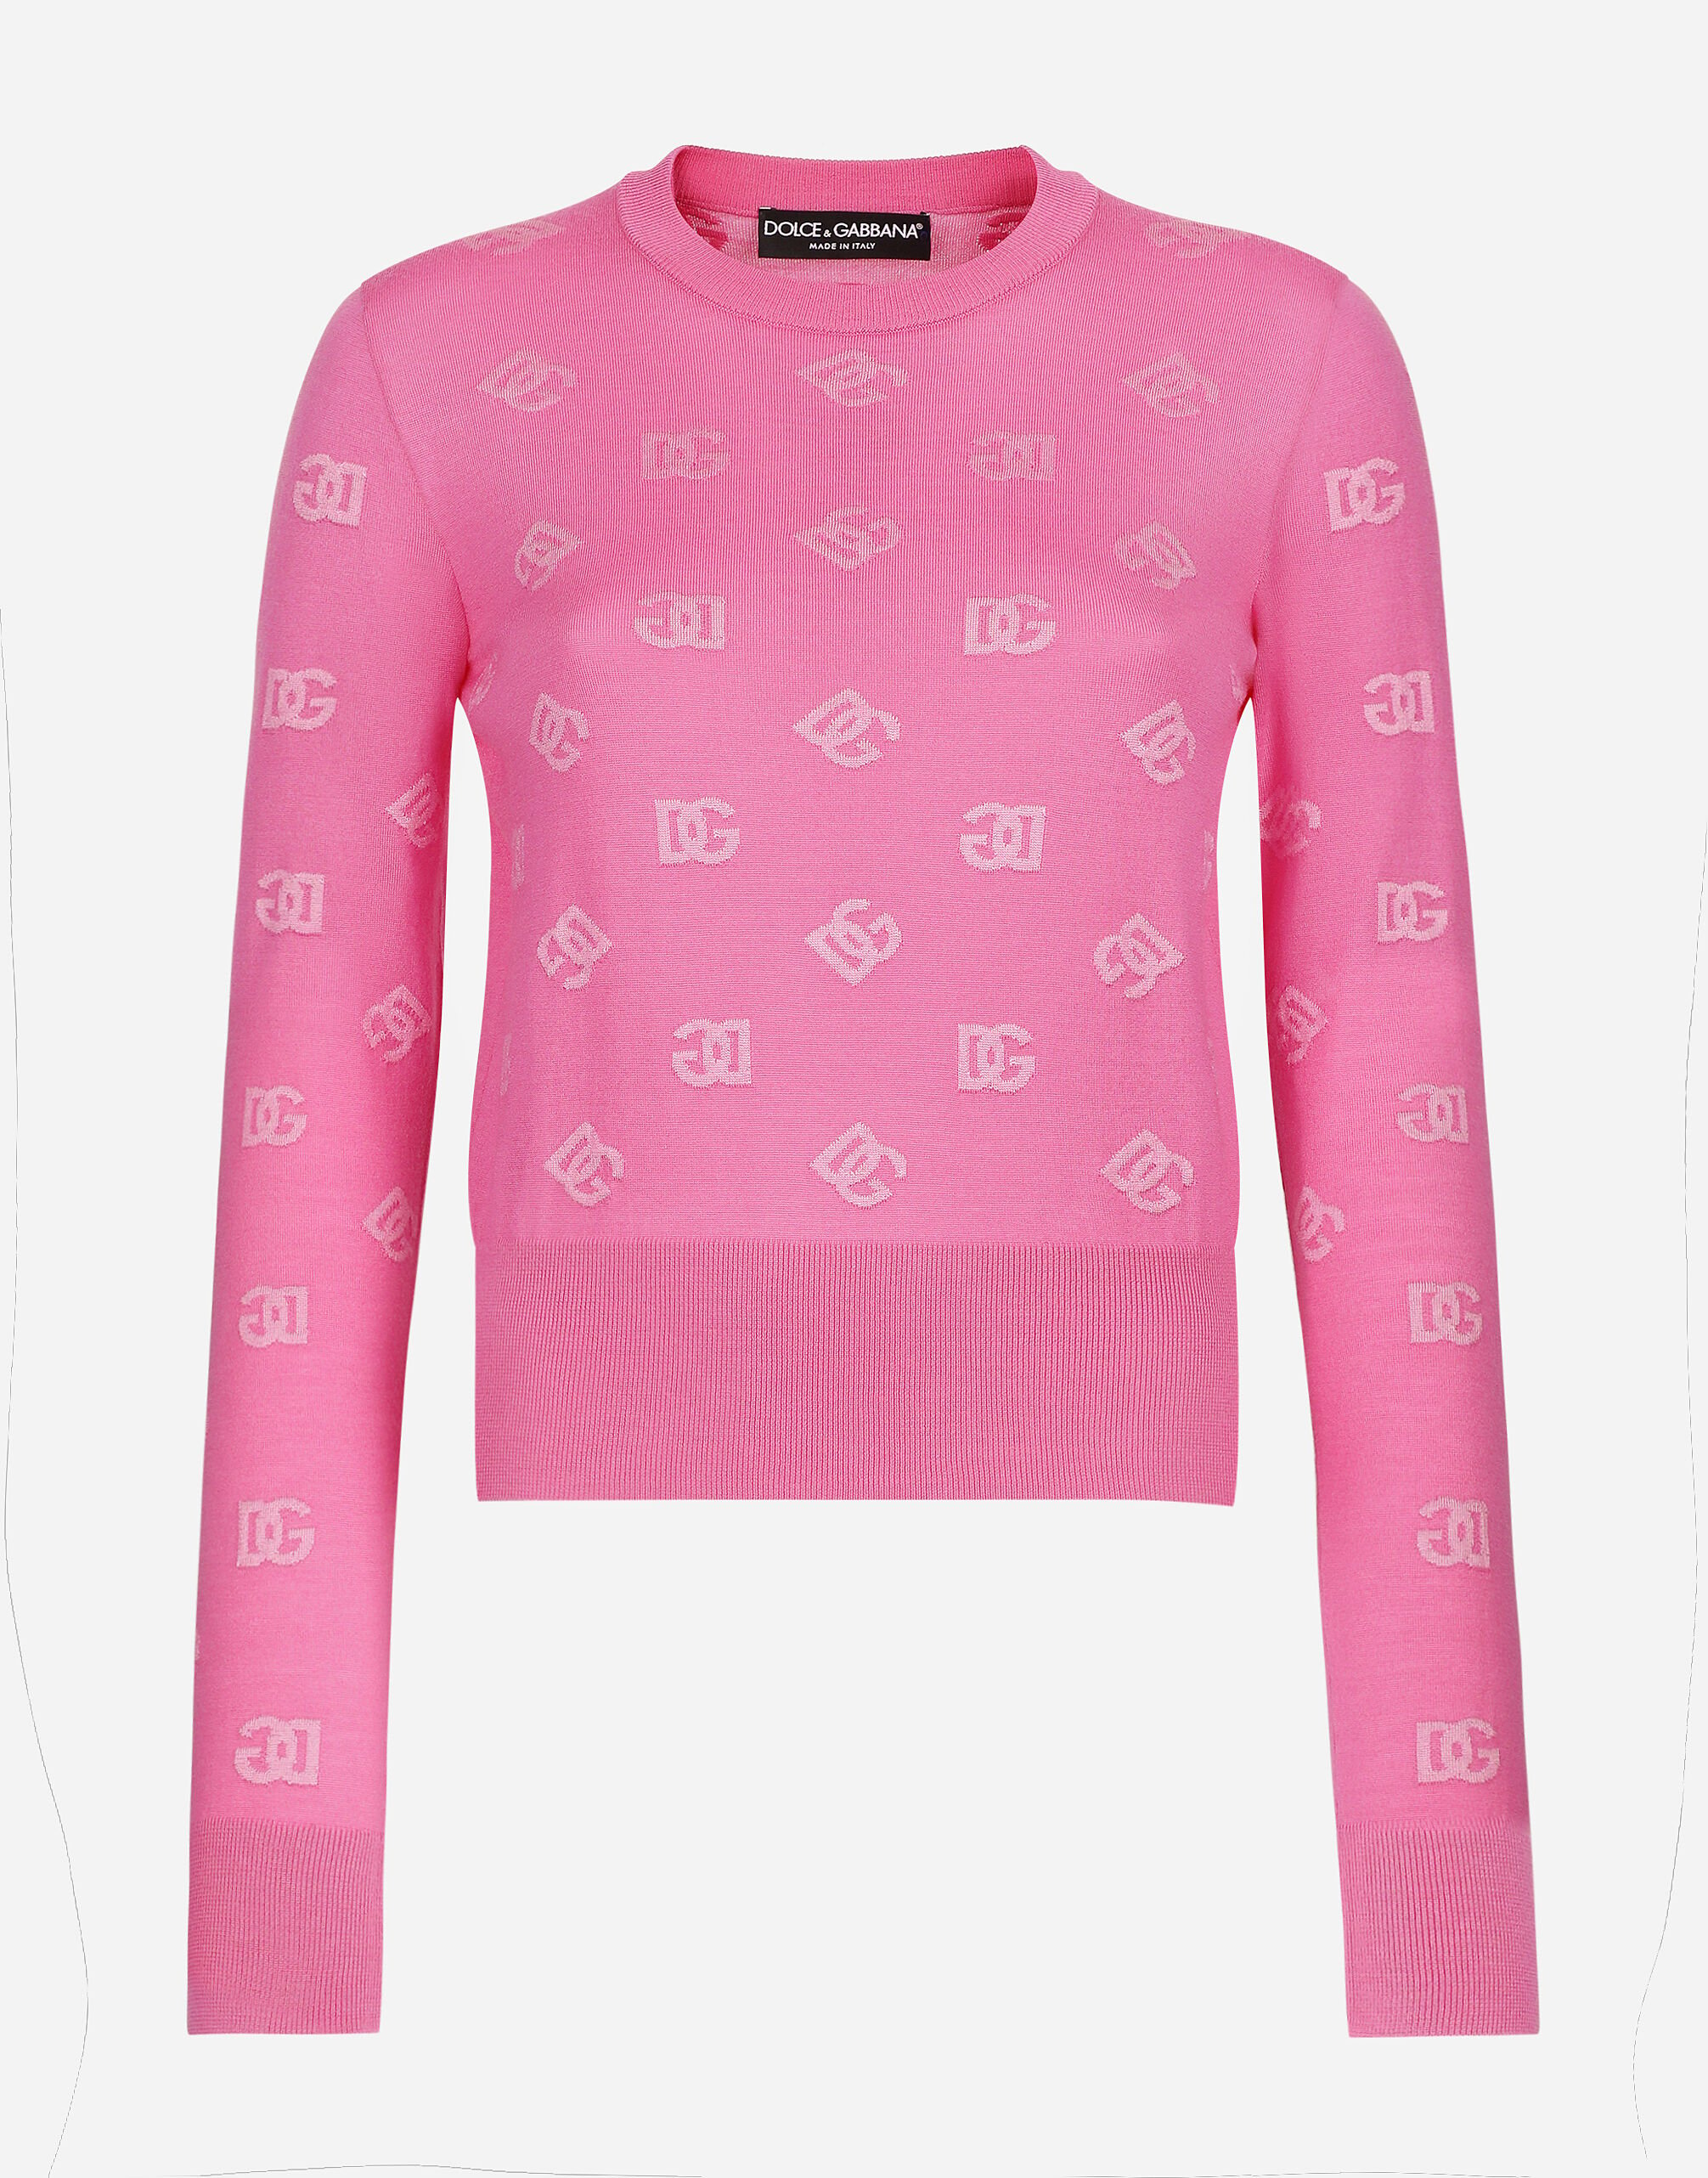 Dolce & Gabbana Wool and silk jacquard sweater with tonal DG logo Print FXX06TJCVYK